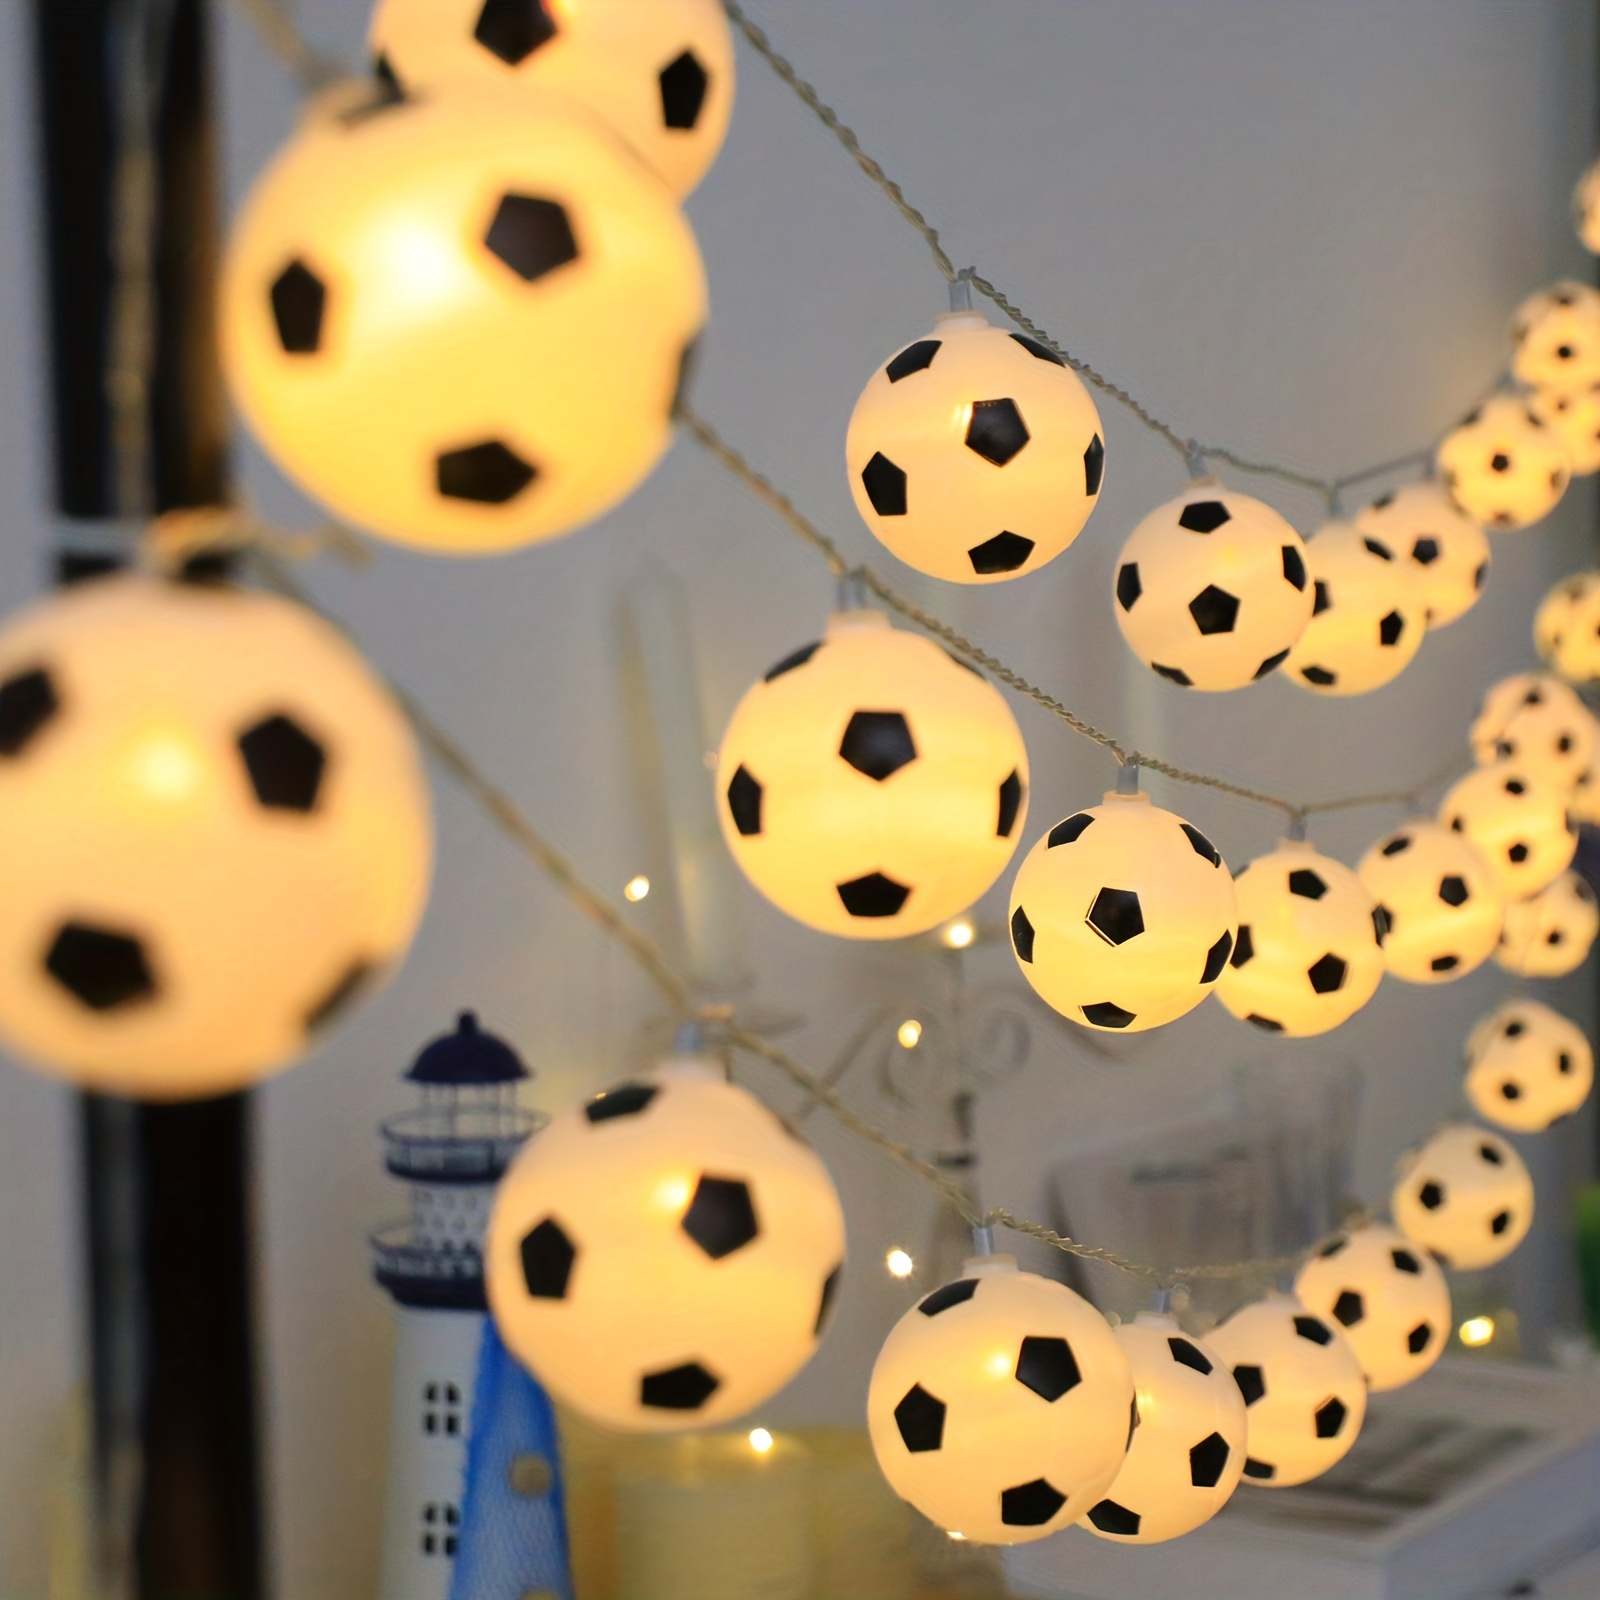 shayoostore #football #decoration #birthdaydecor décoration thème